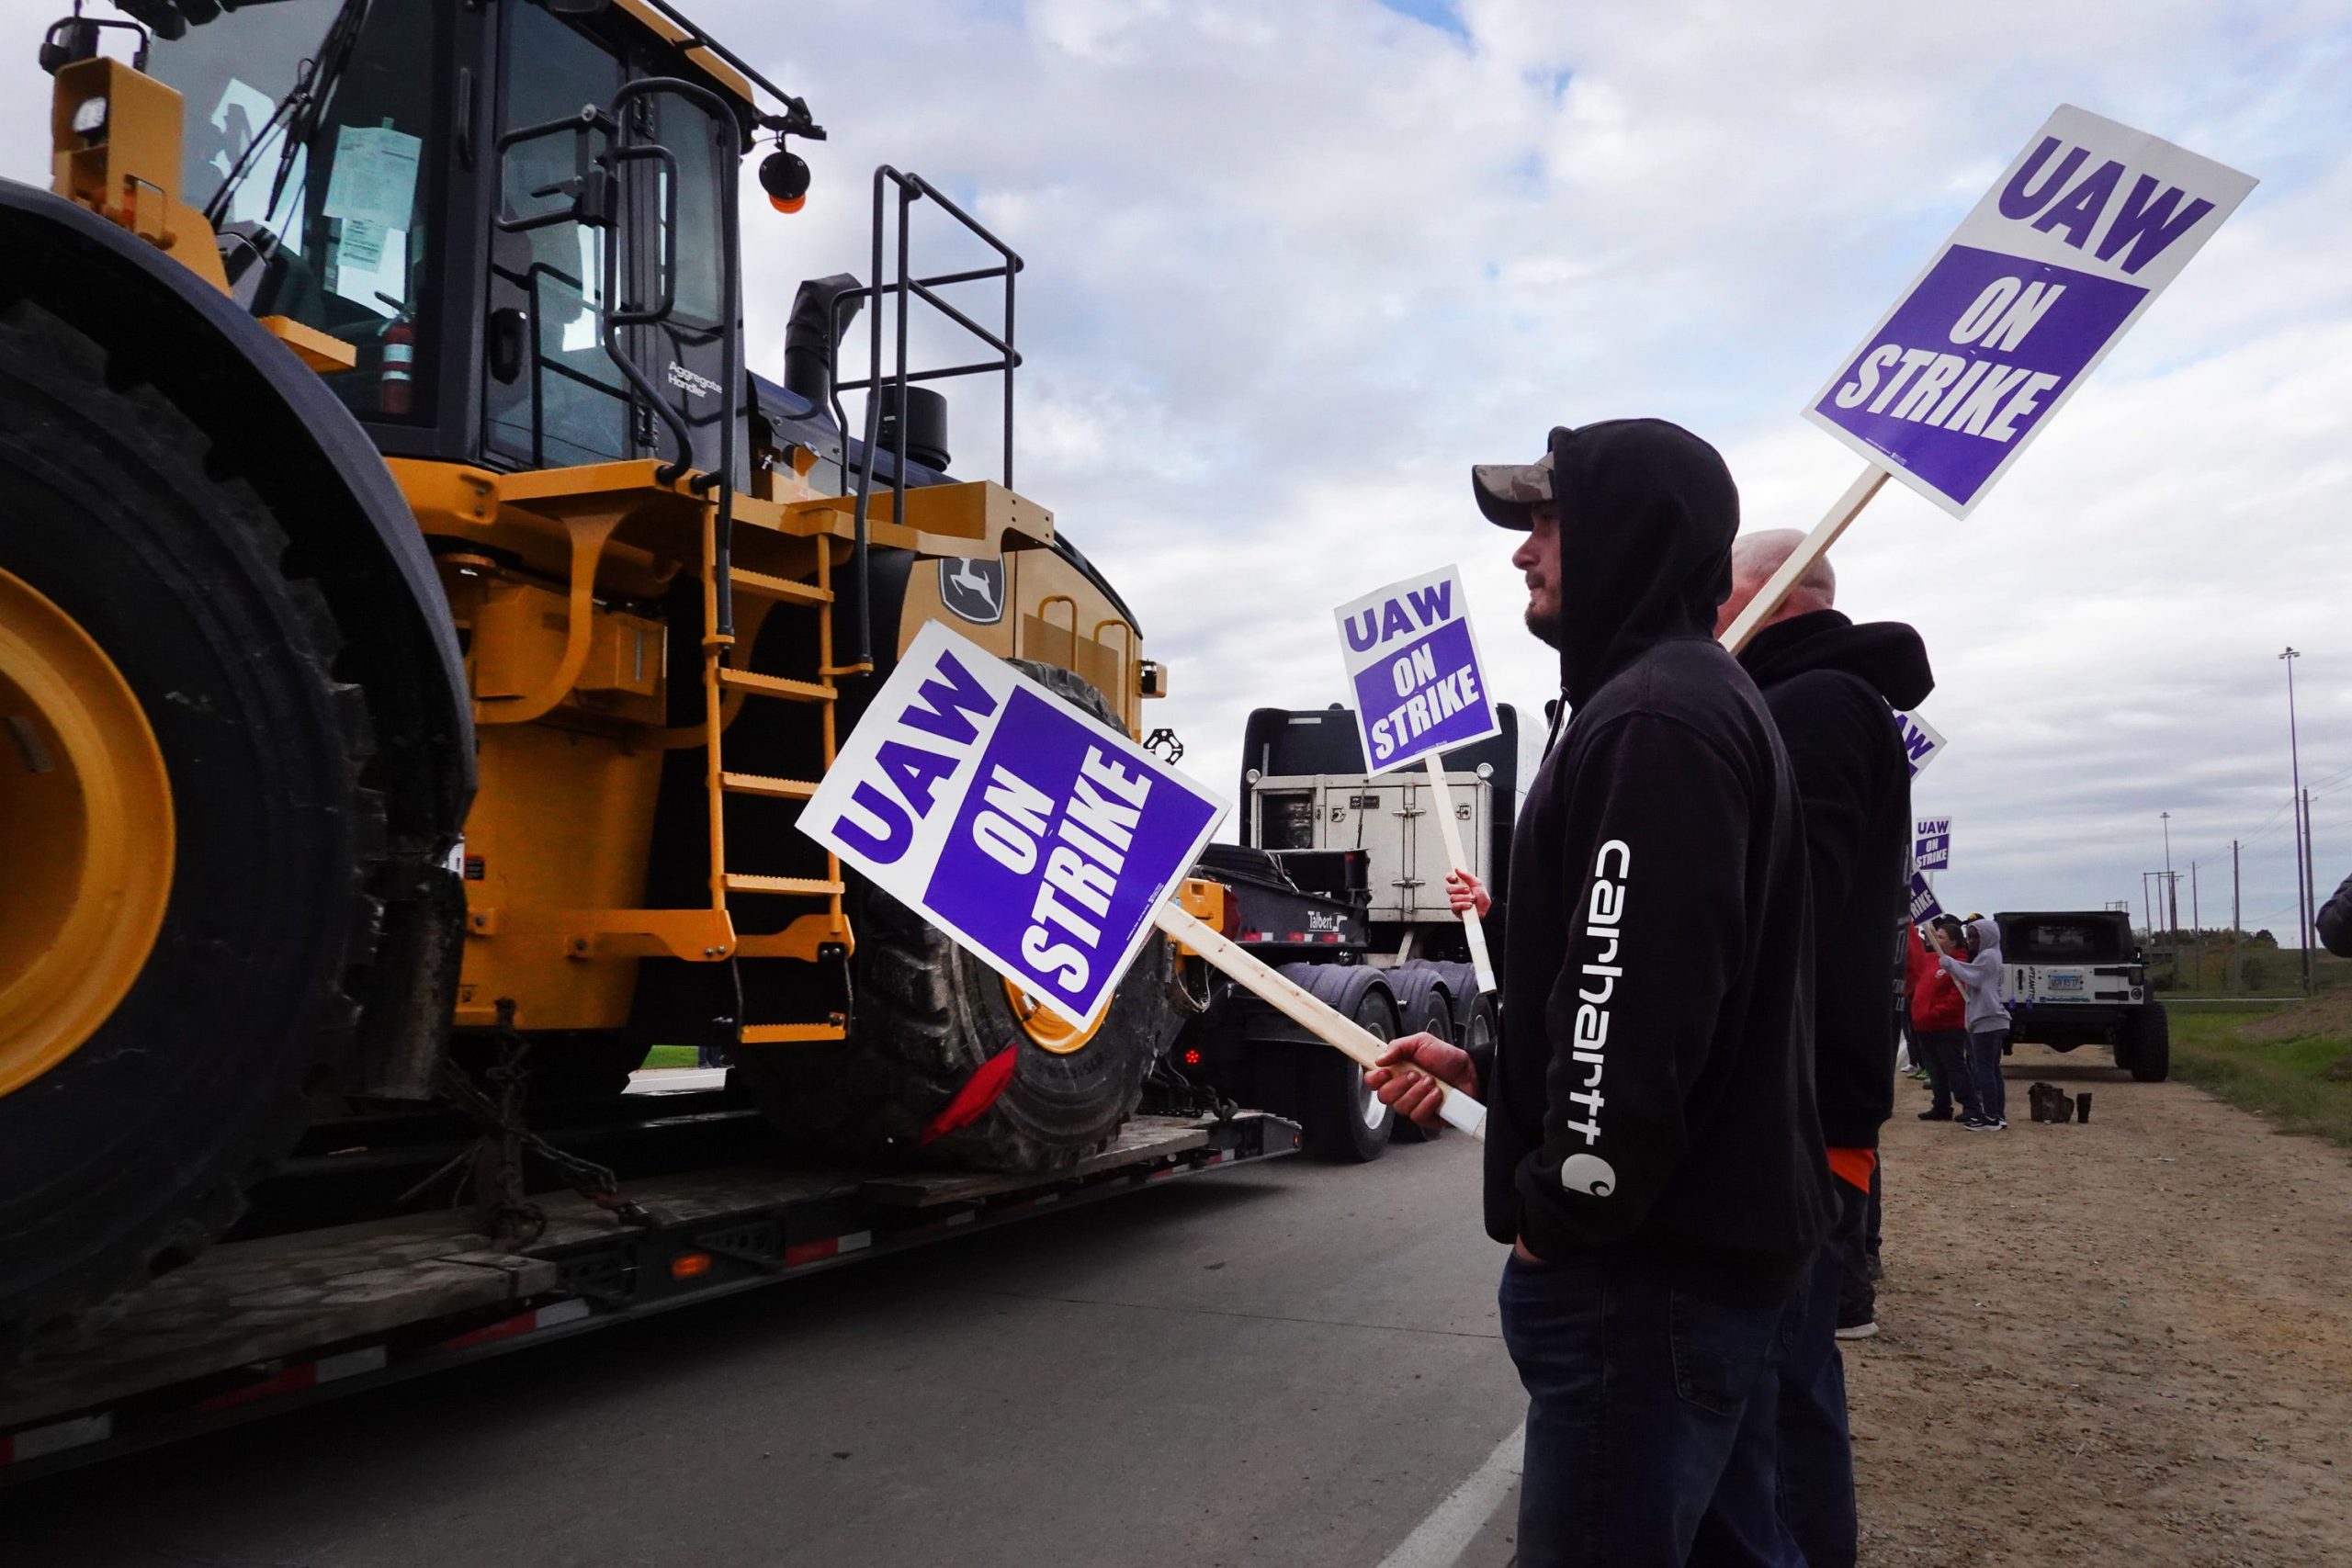 John Deere workers on strike in Davenport, Iowa.